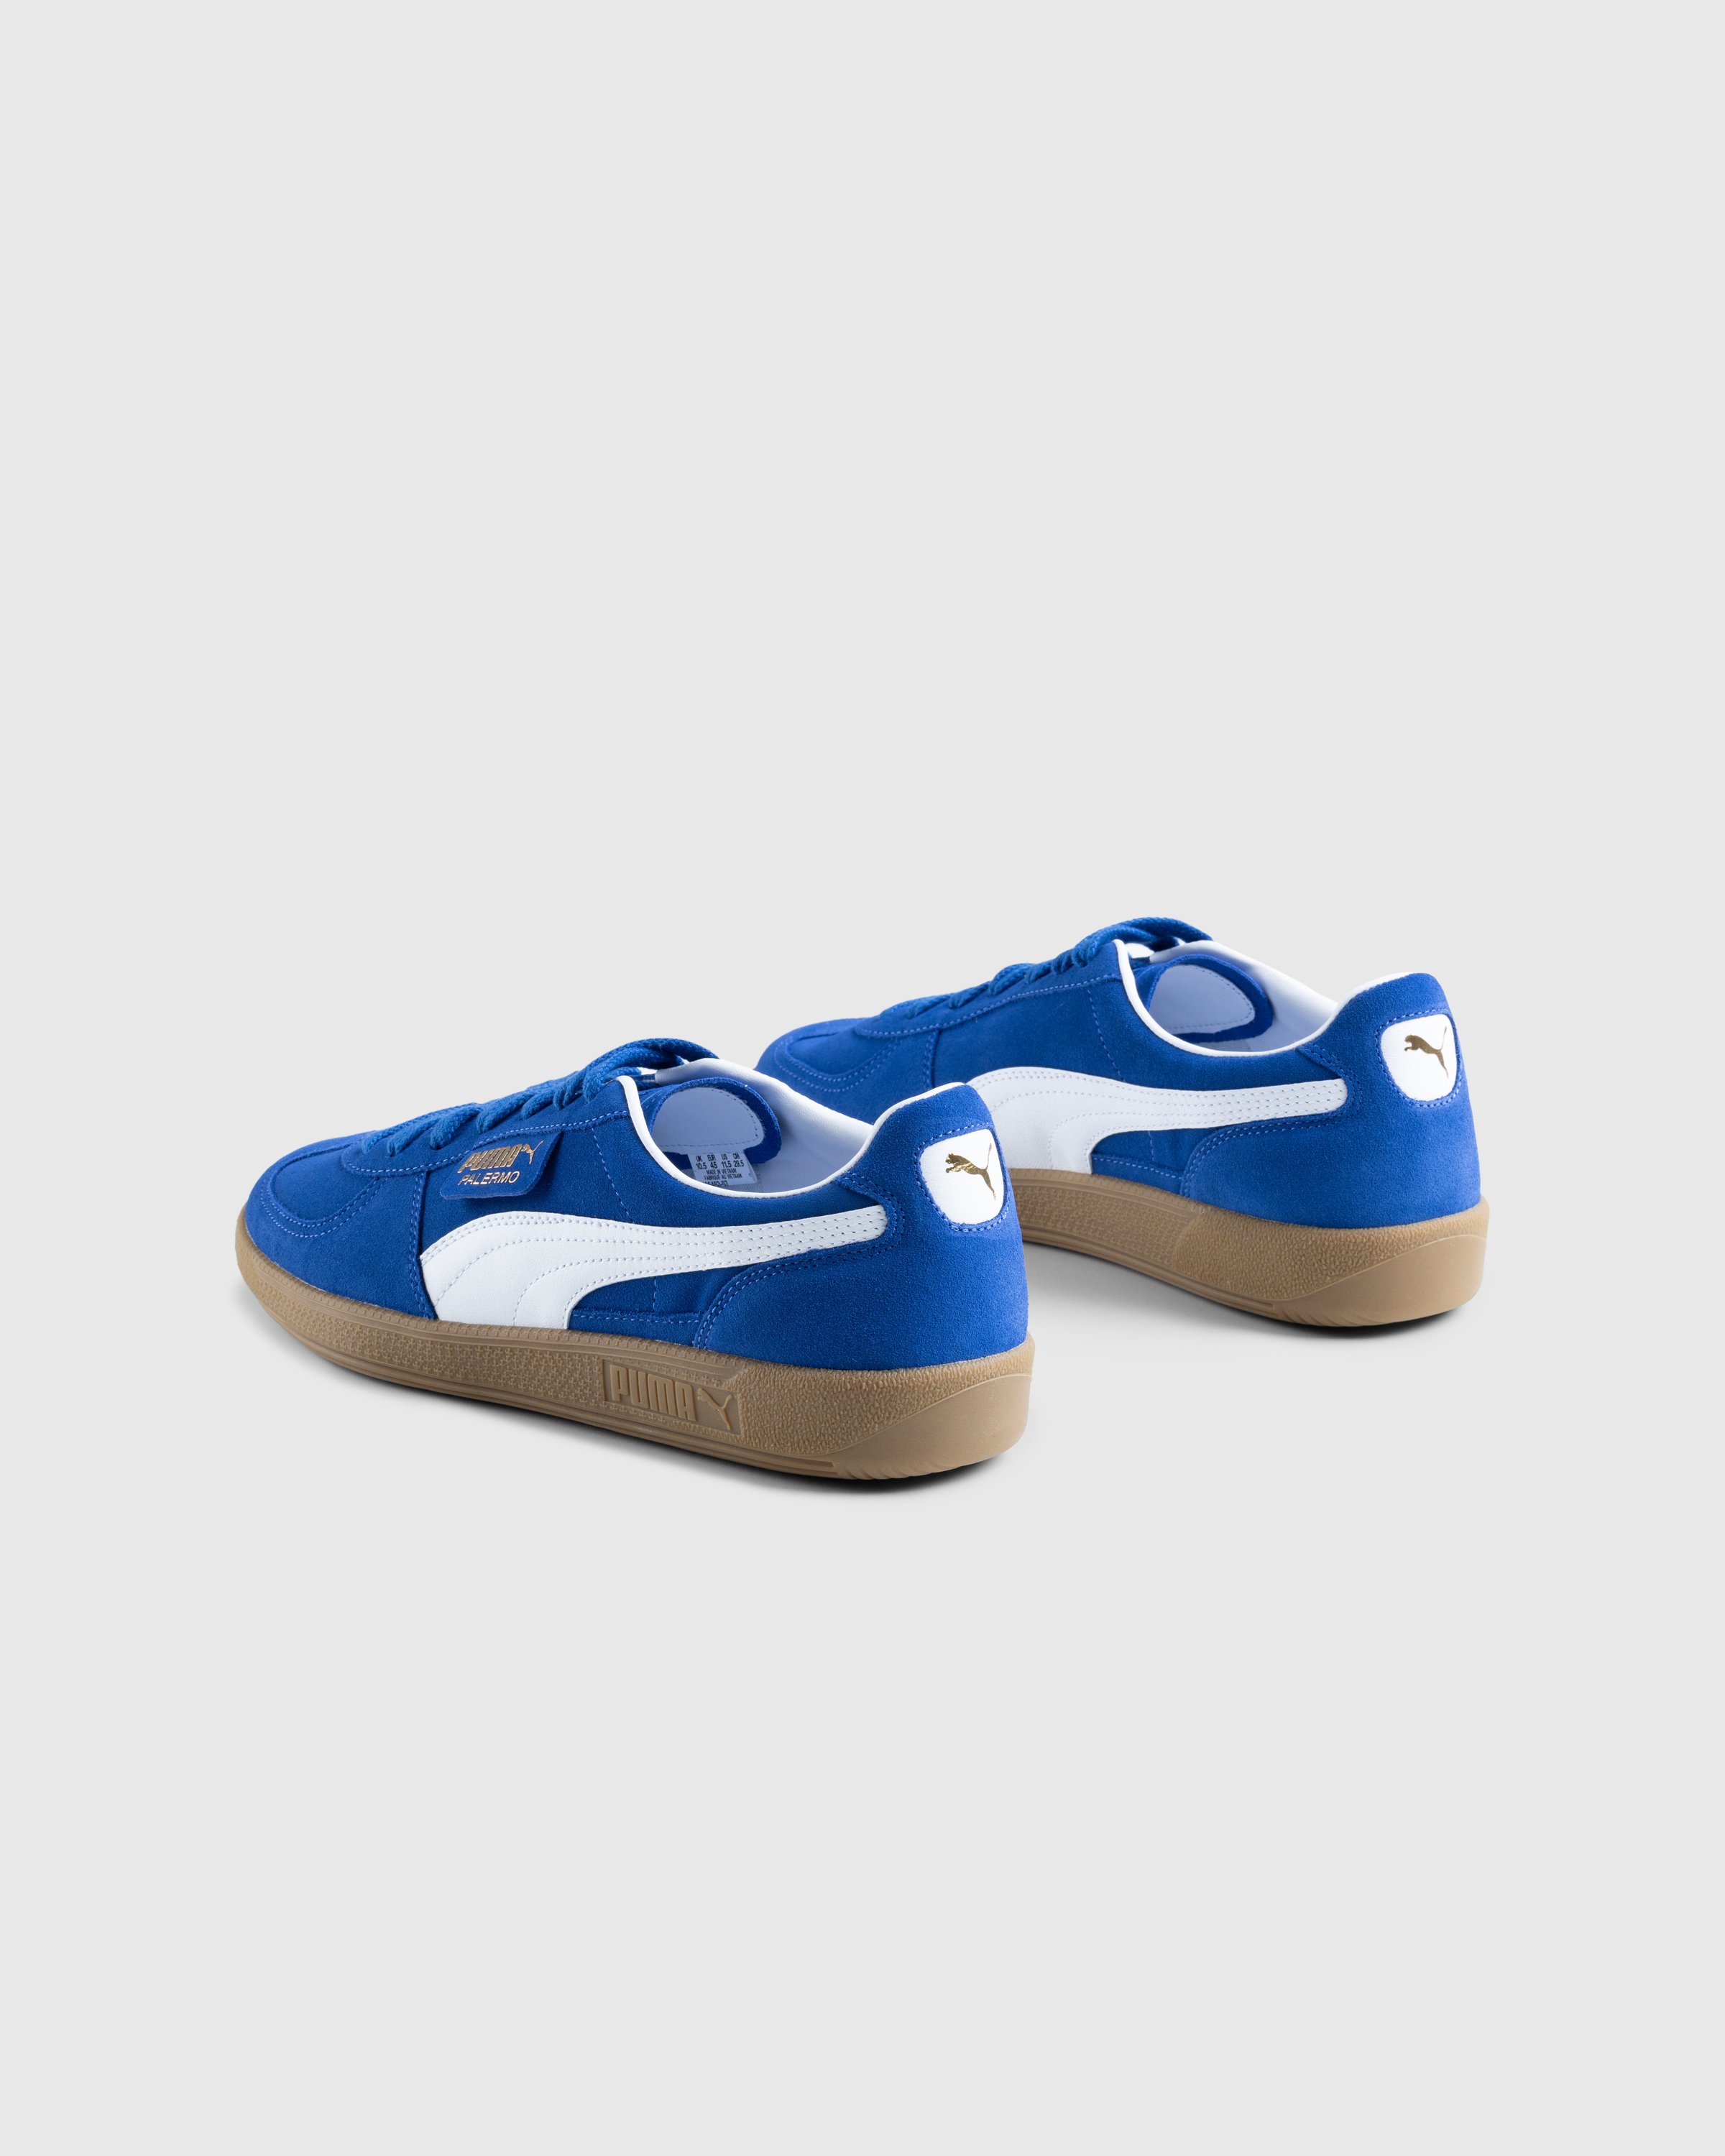 Puma - Palermo Cobalt Glaze/White - Footwear - Blue - Image 4